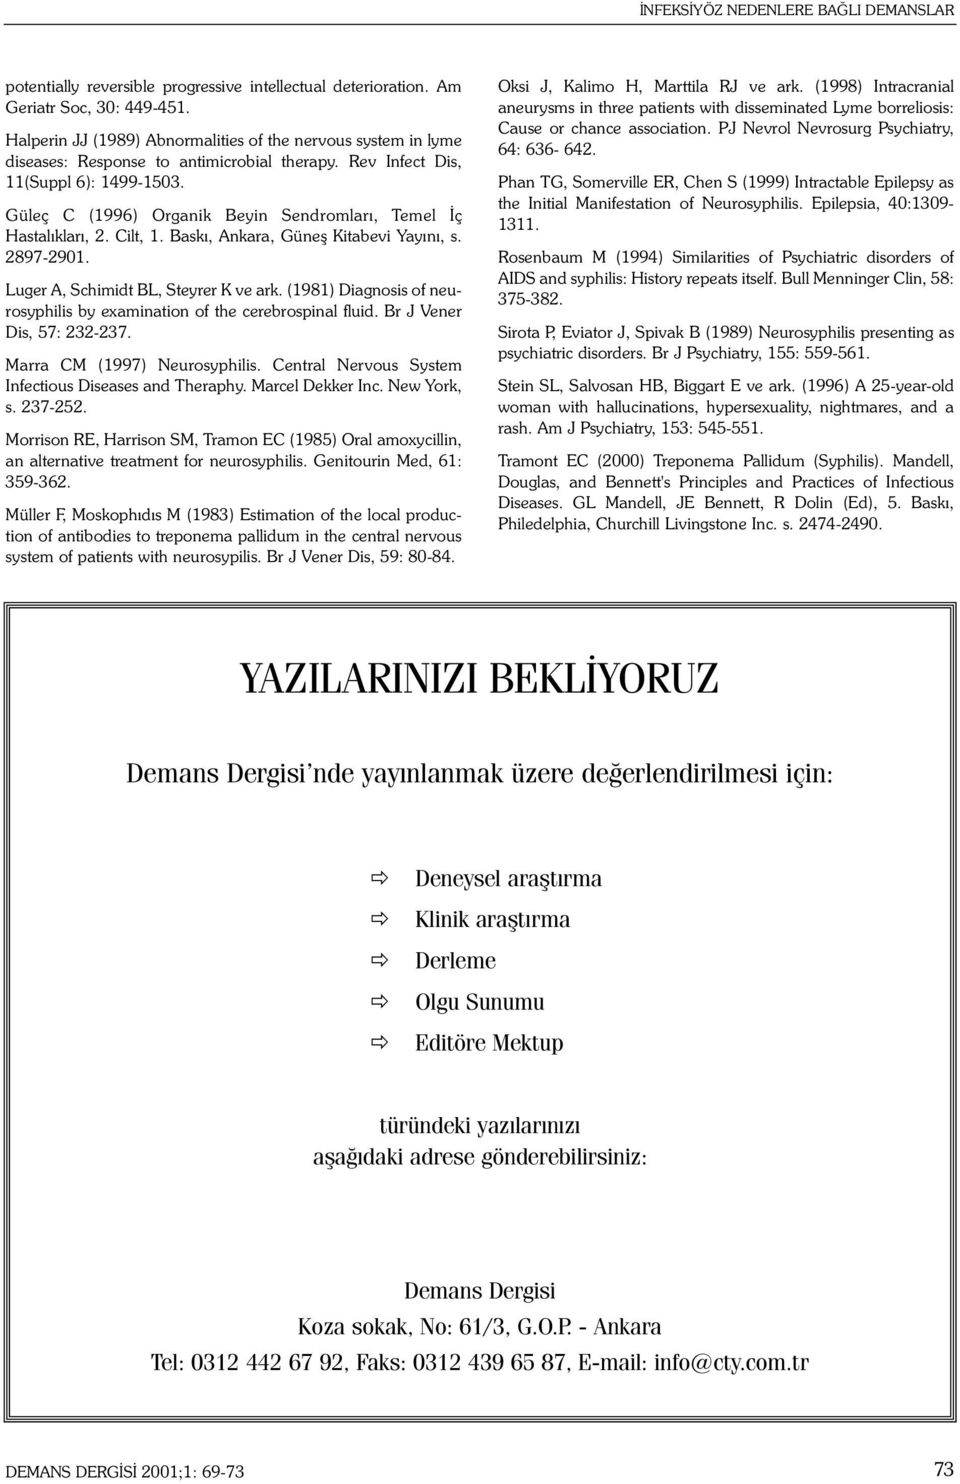 Güleç C (1996) Organik Beyin Sendromlarý, Temel Ýç Hastalýklarý, 2. Cilt, 1. Baský, Ankara, Güneþ Kitabevi Yayýný, s. 2897-2901. Luger A, Schimidt BL, Steyrer K ve ark.